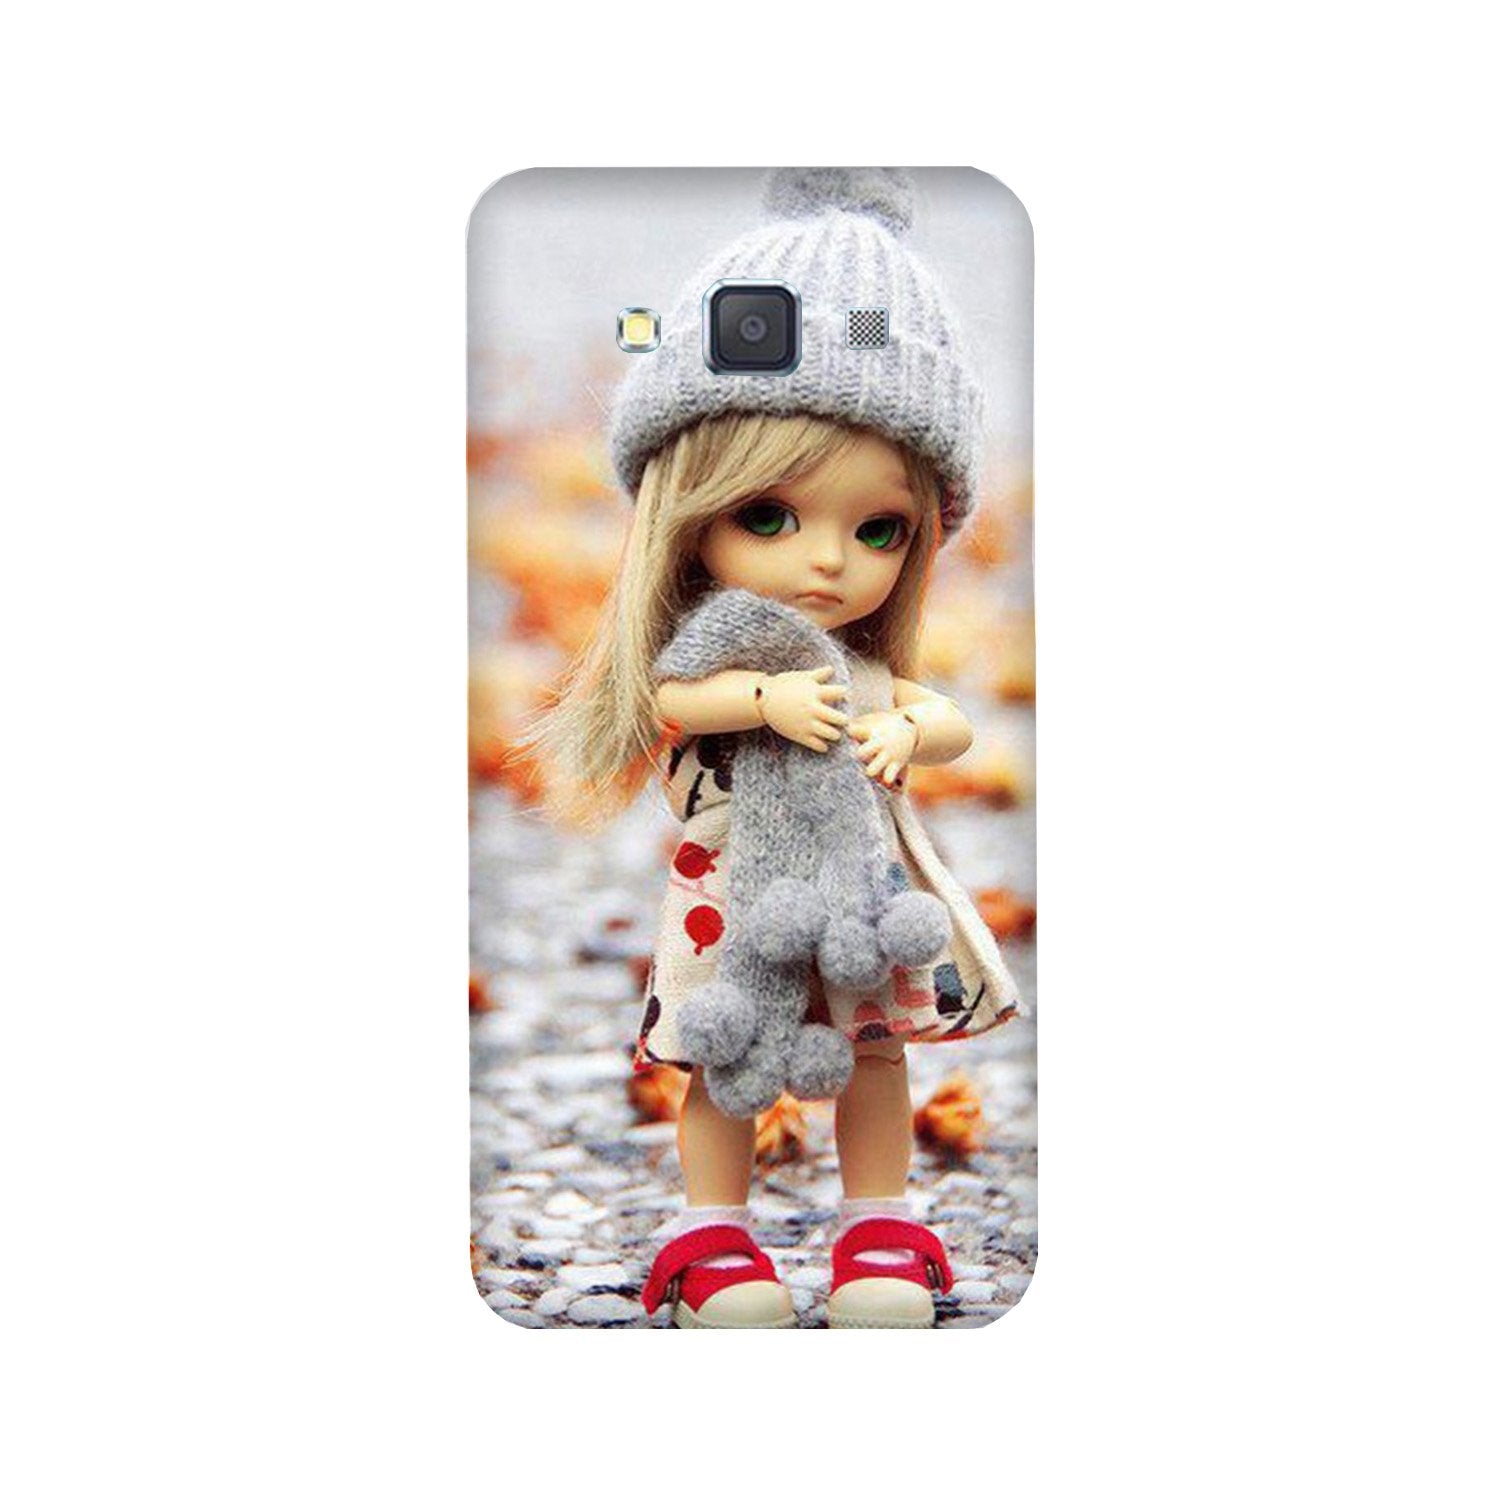 Cute Doll Case for Galaxy E5